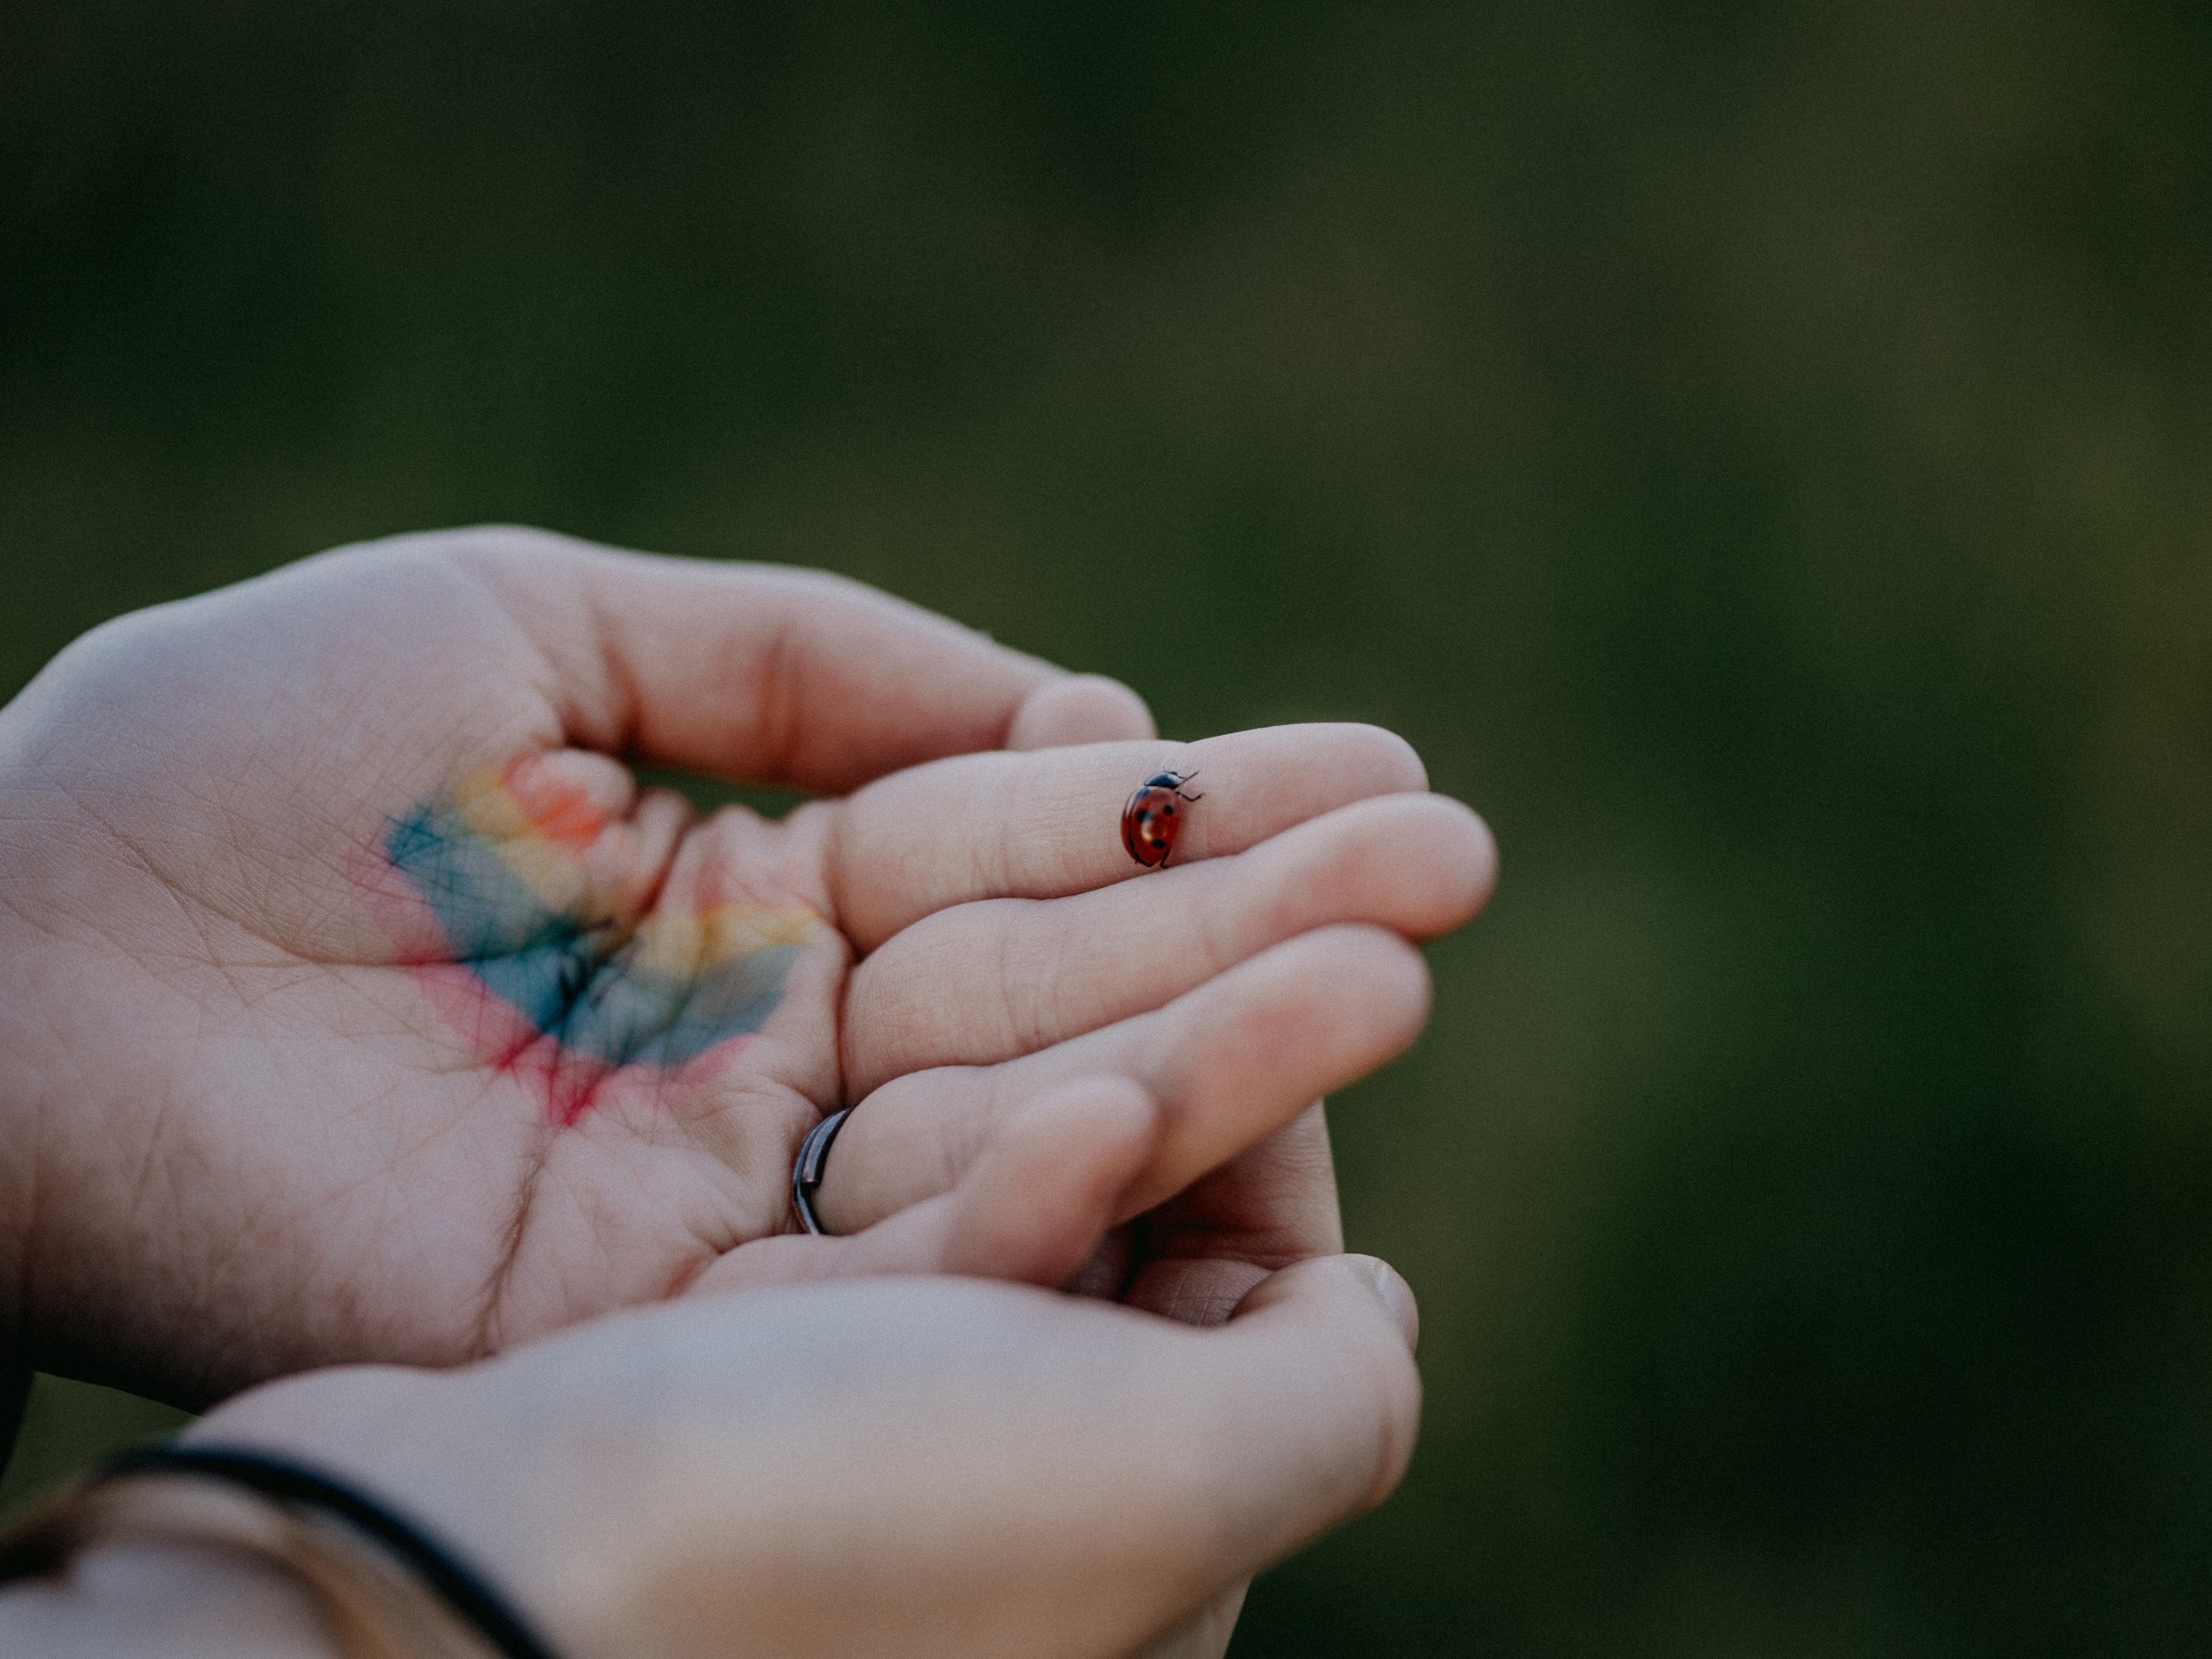 A woman's hands holding a ladybug. | Source: Unsplash